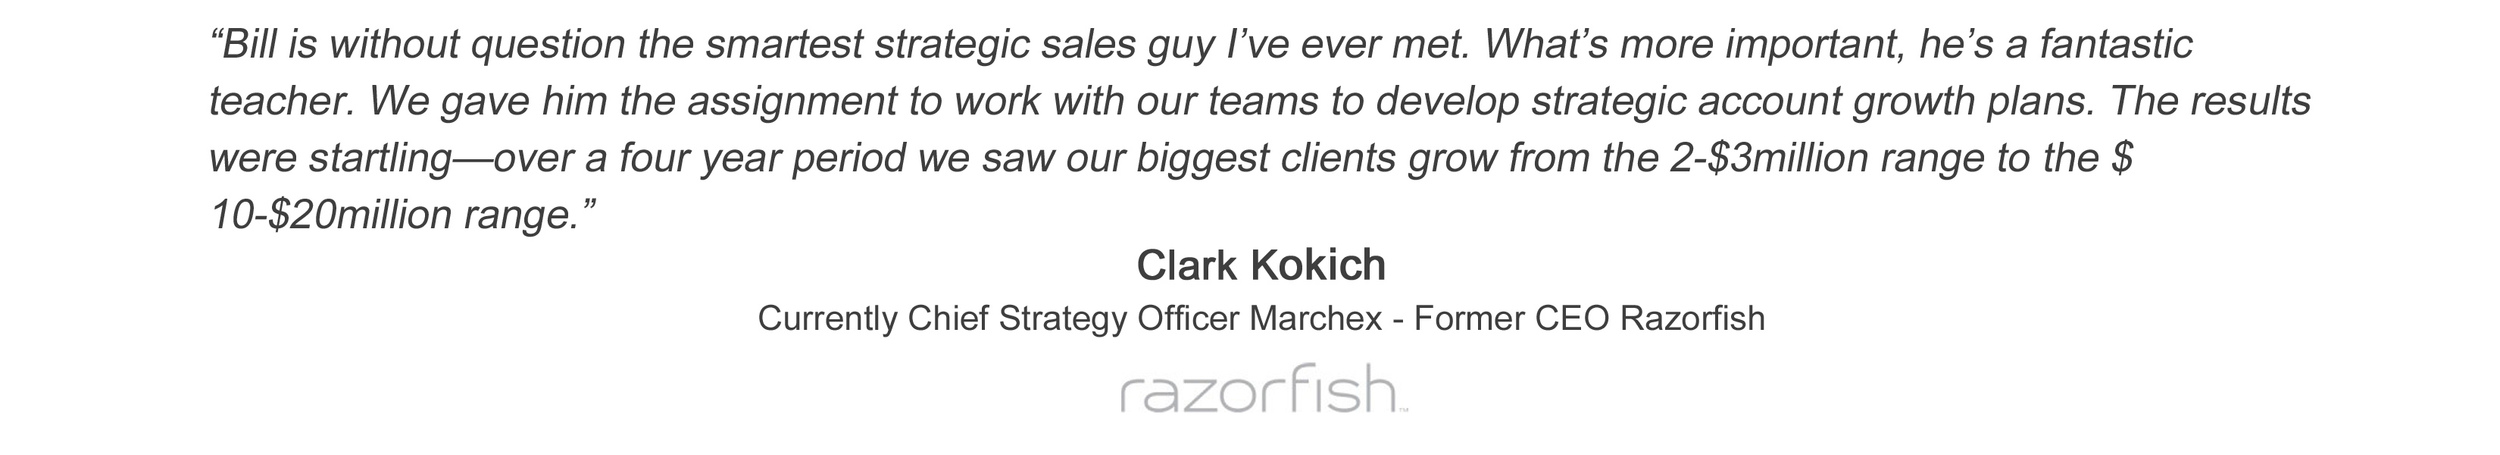 Clark Kokich Logo Razorfish only.jpg